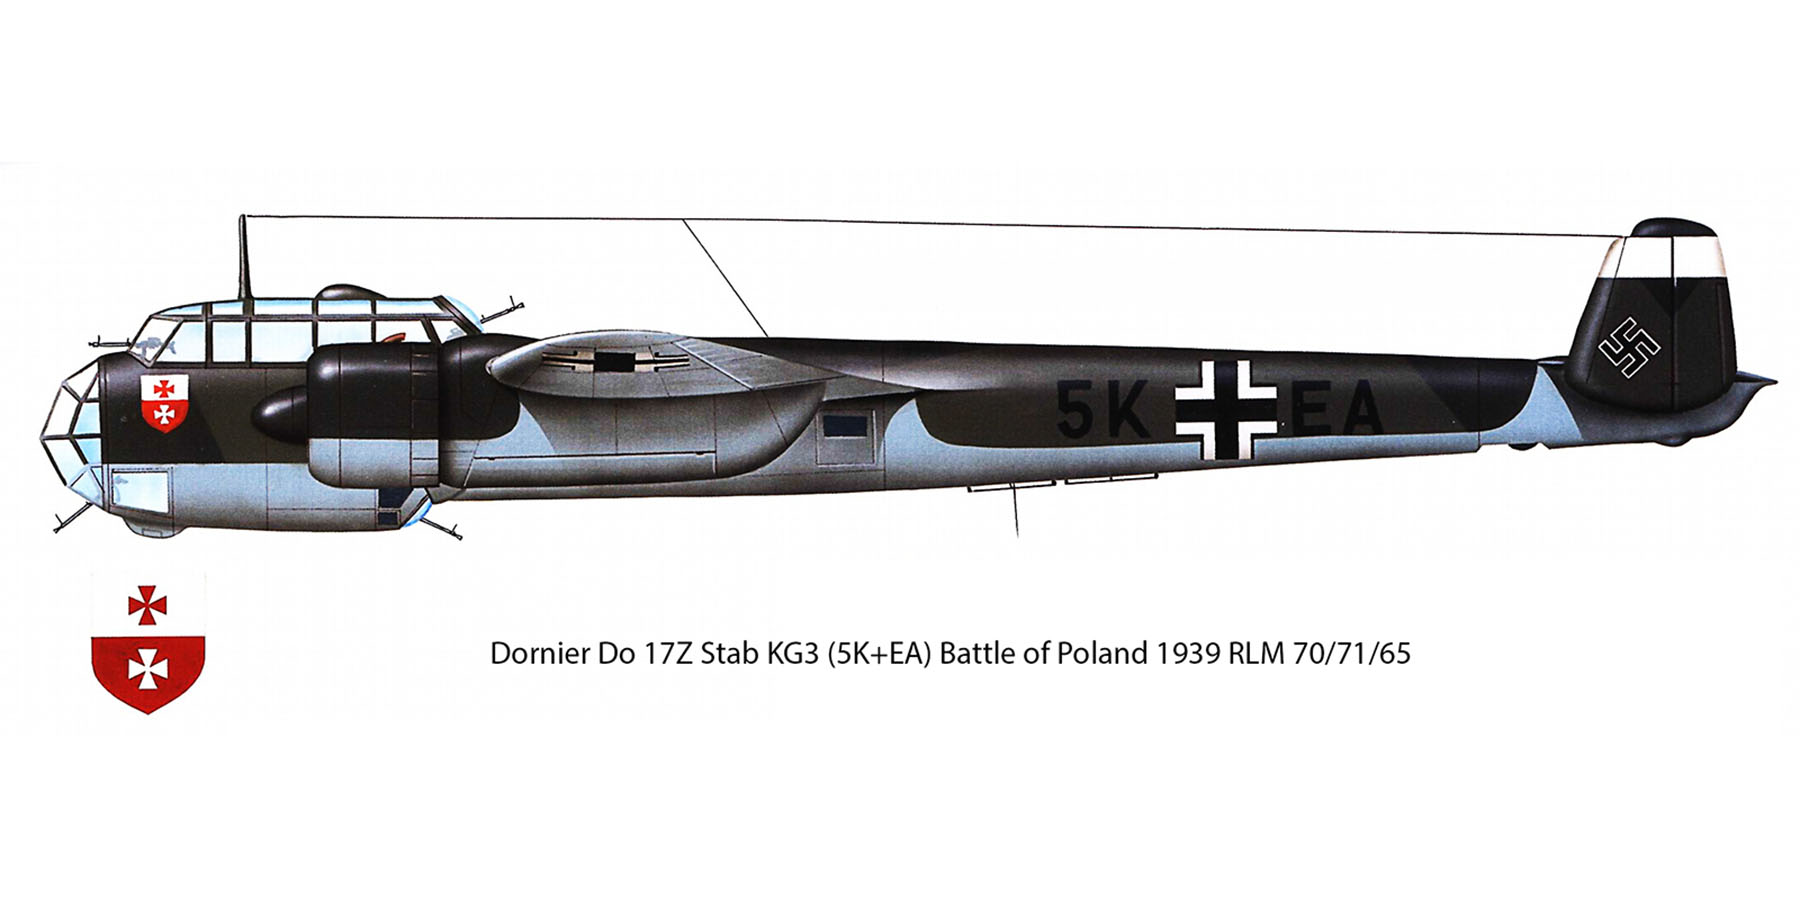 Dornier Do 17Z Geschwader Stab KG3 5K+EA Battle of Poland 1939 0A